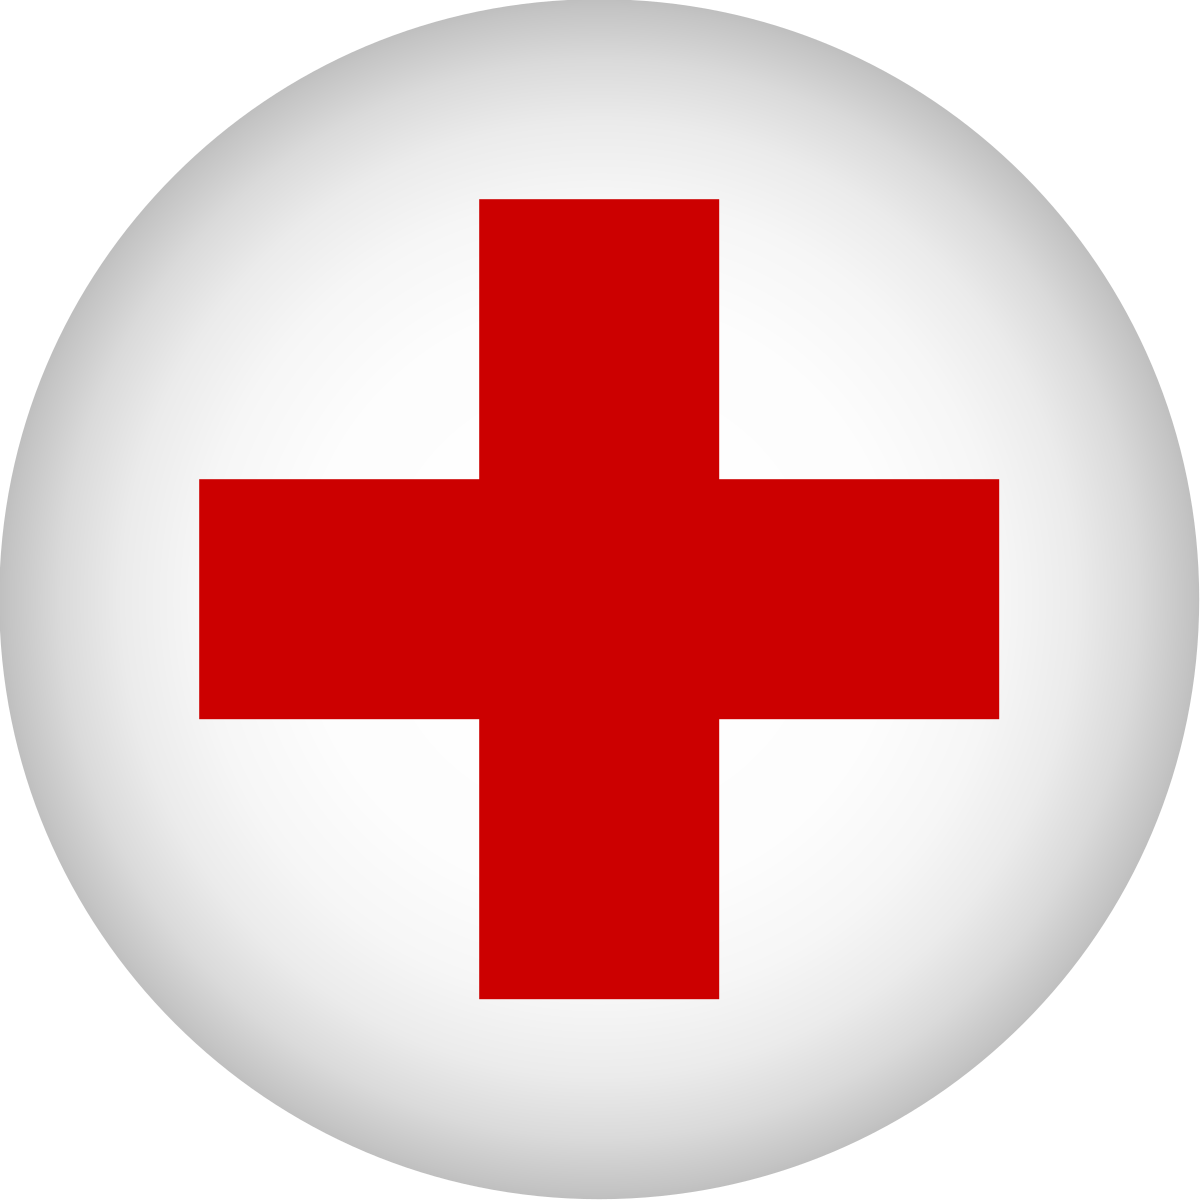 File:Injury icon 2.svg - Wikipedia